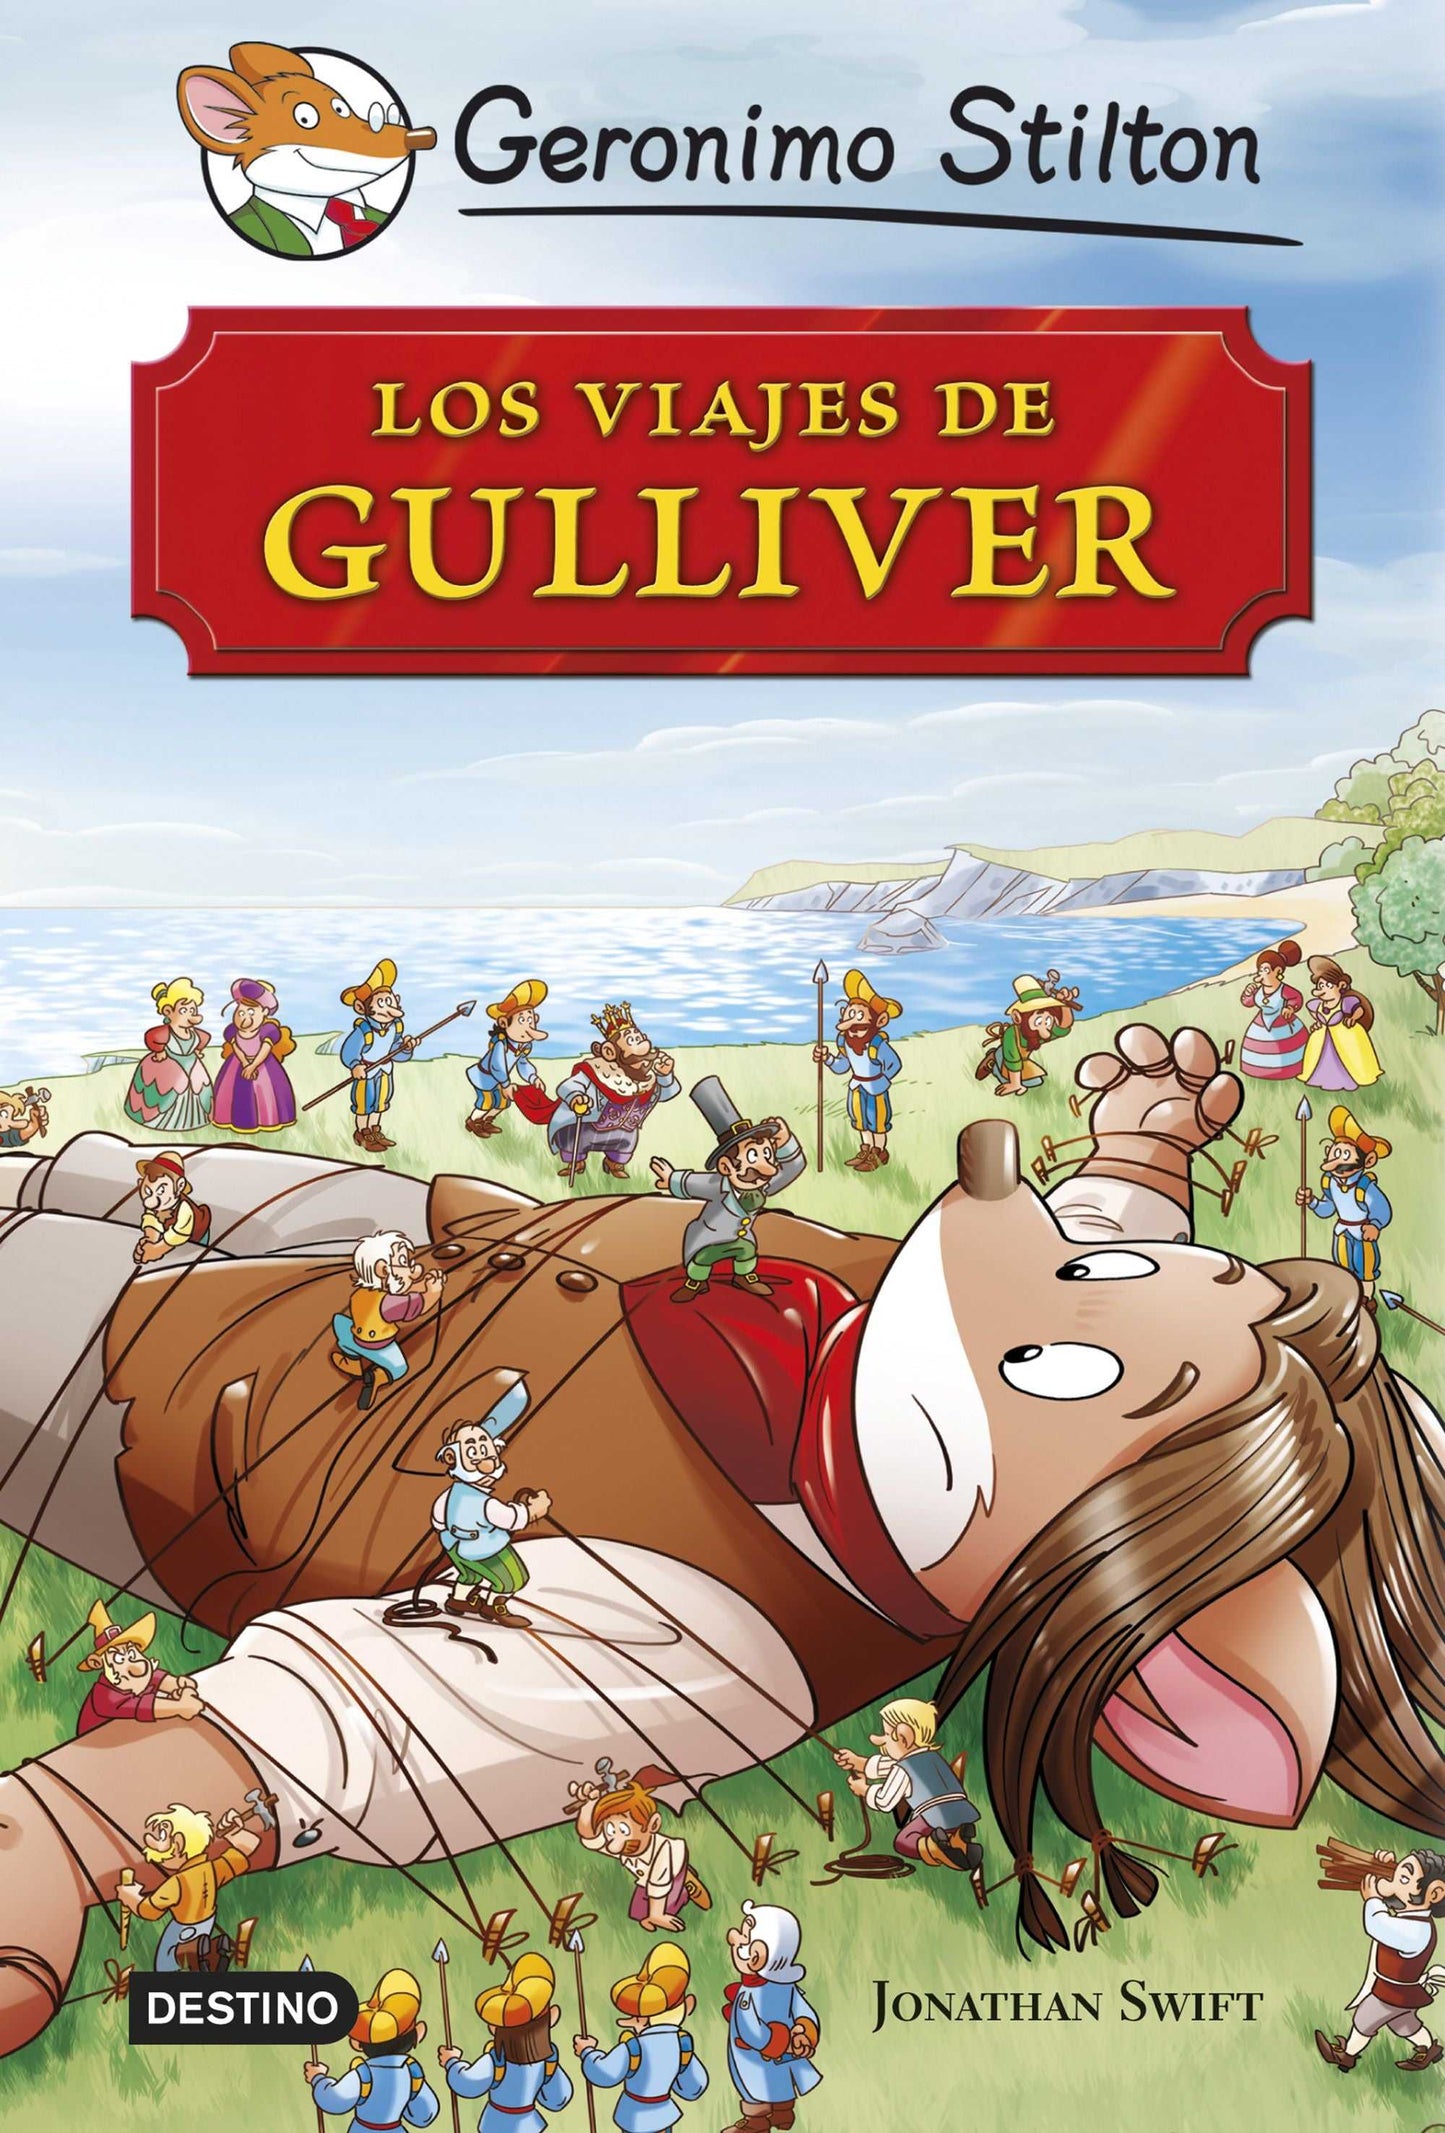 GS. Viajes de Gulliver